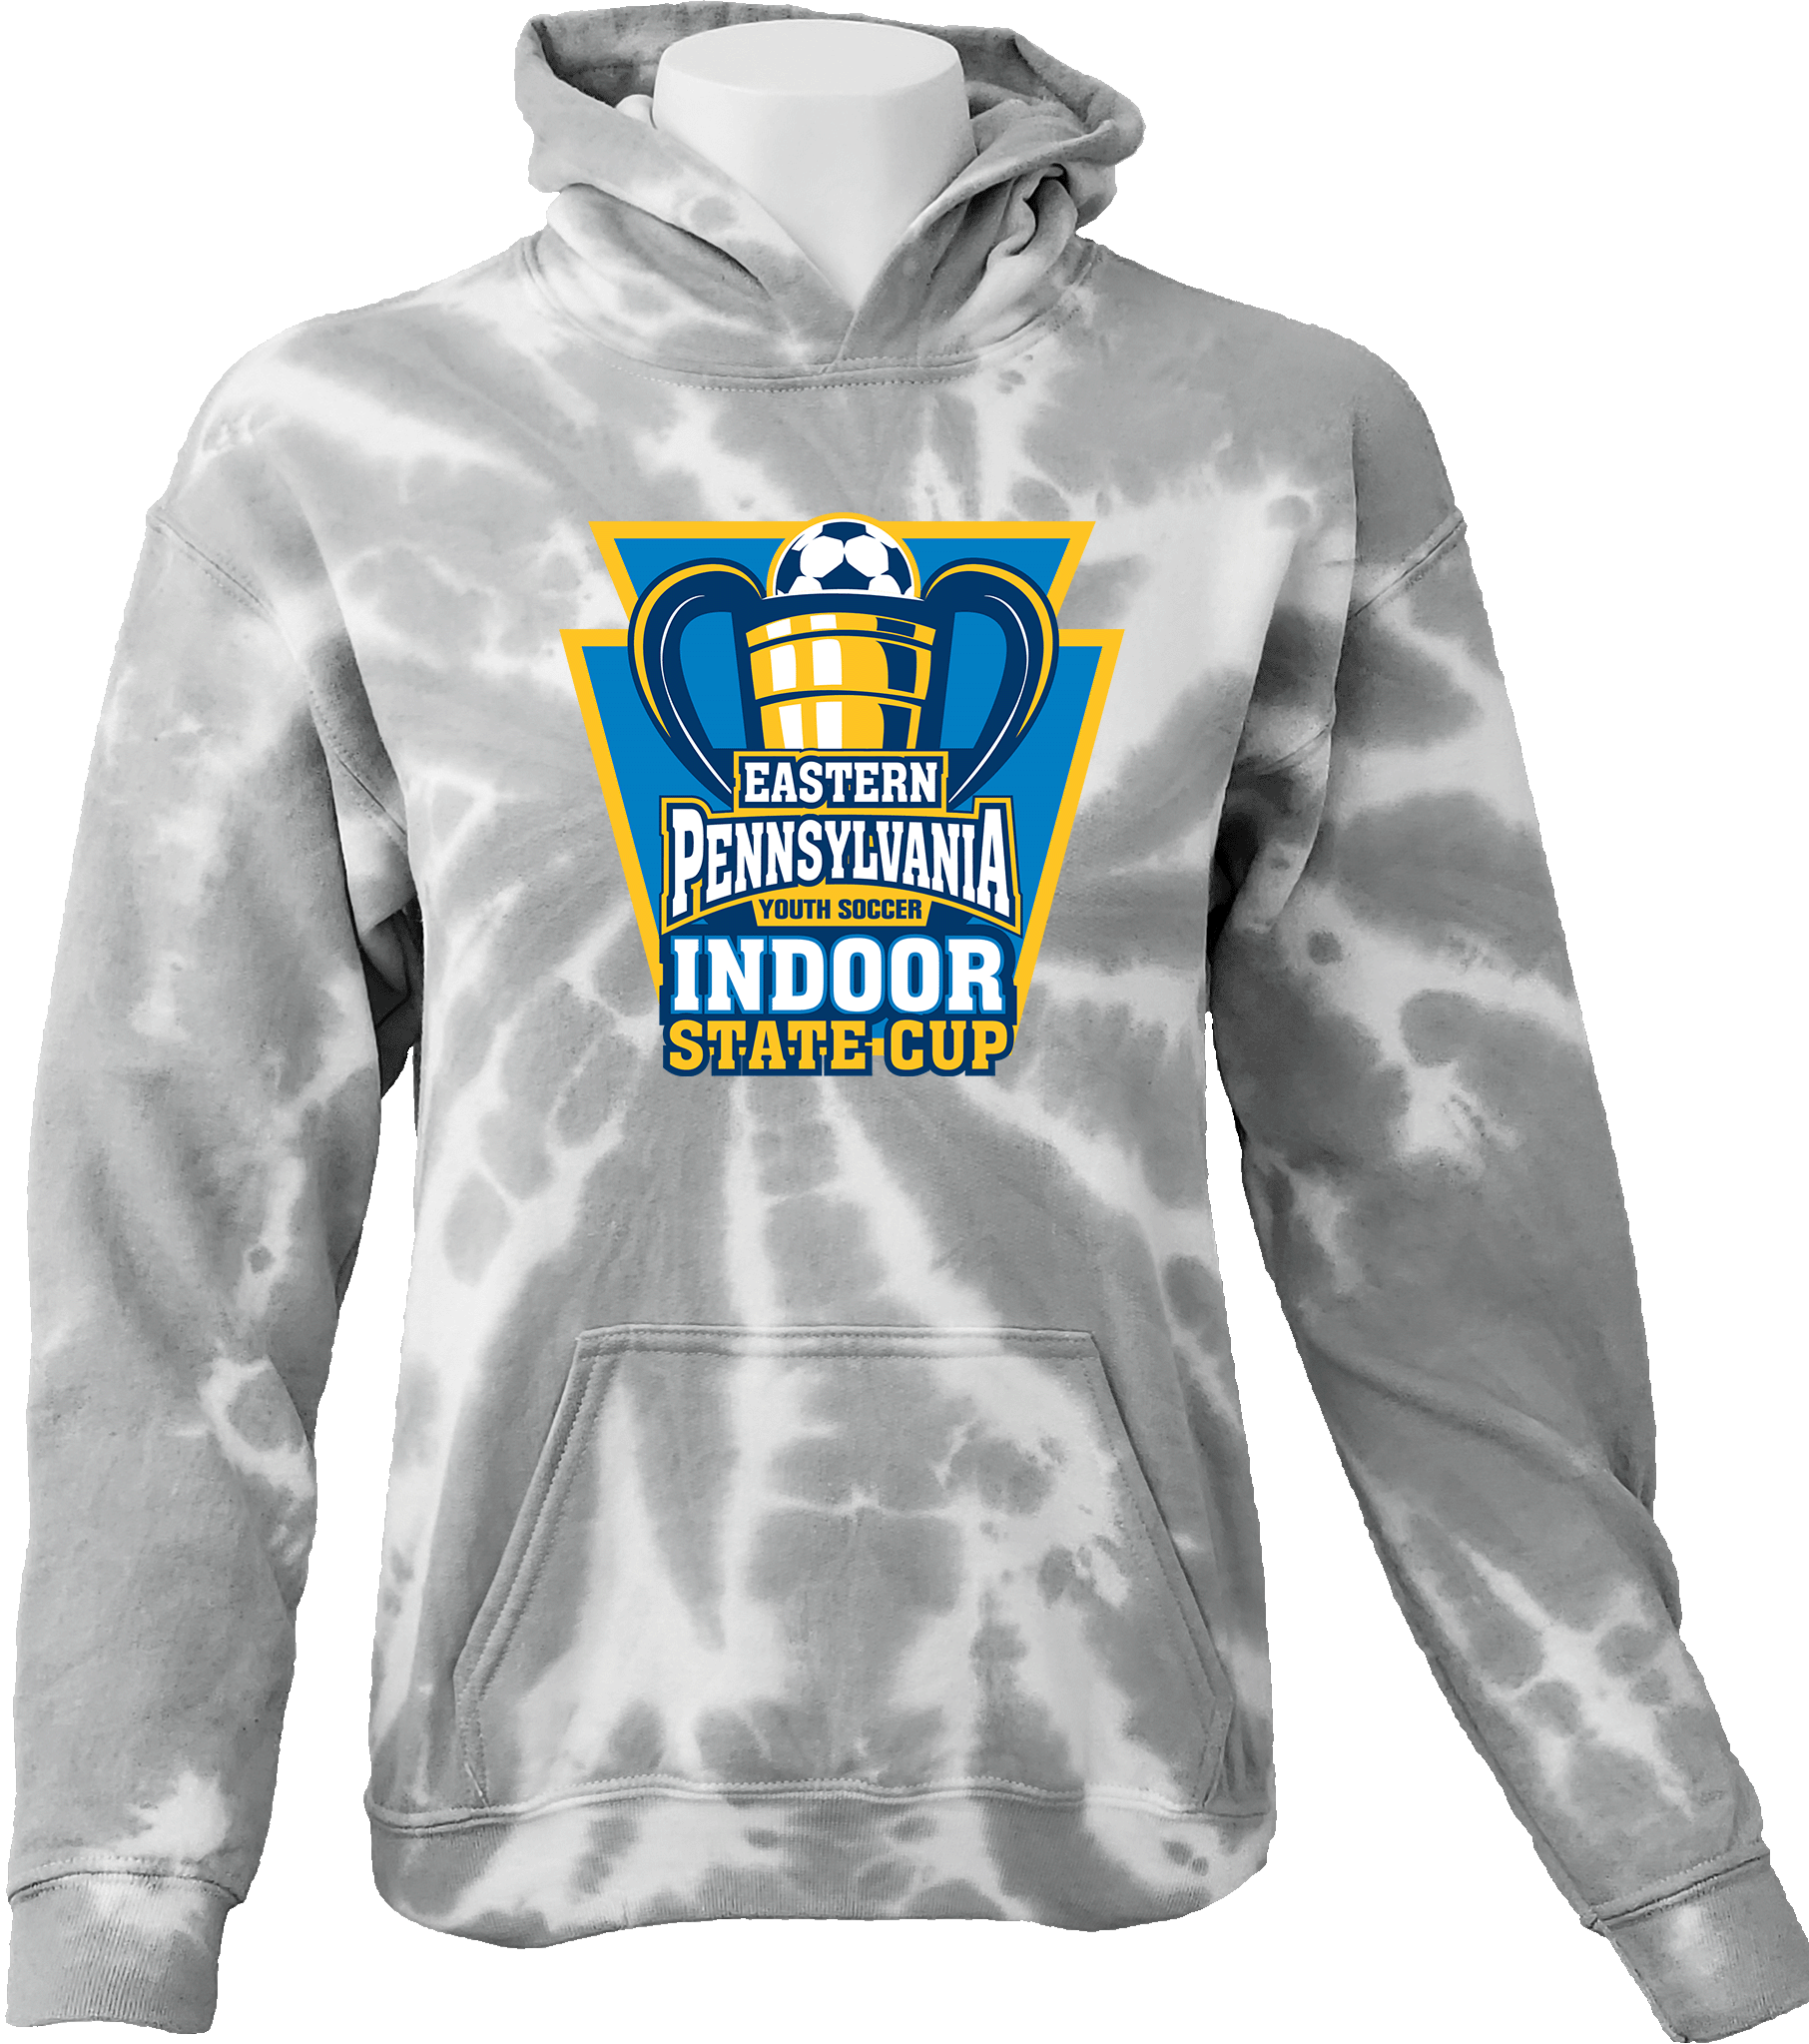 Tie-Dye Hoodies - EPA Indoor State Cup